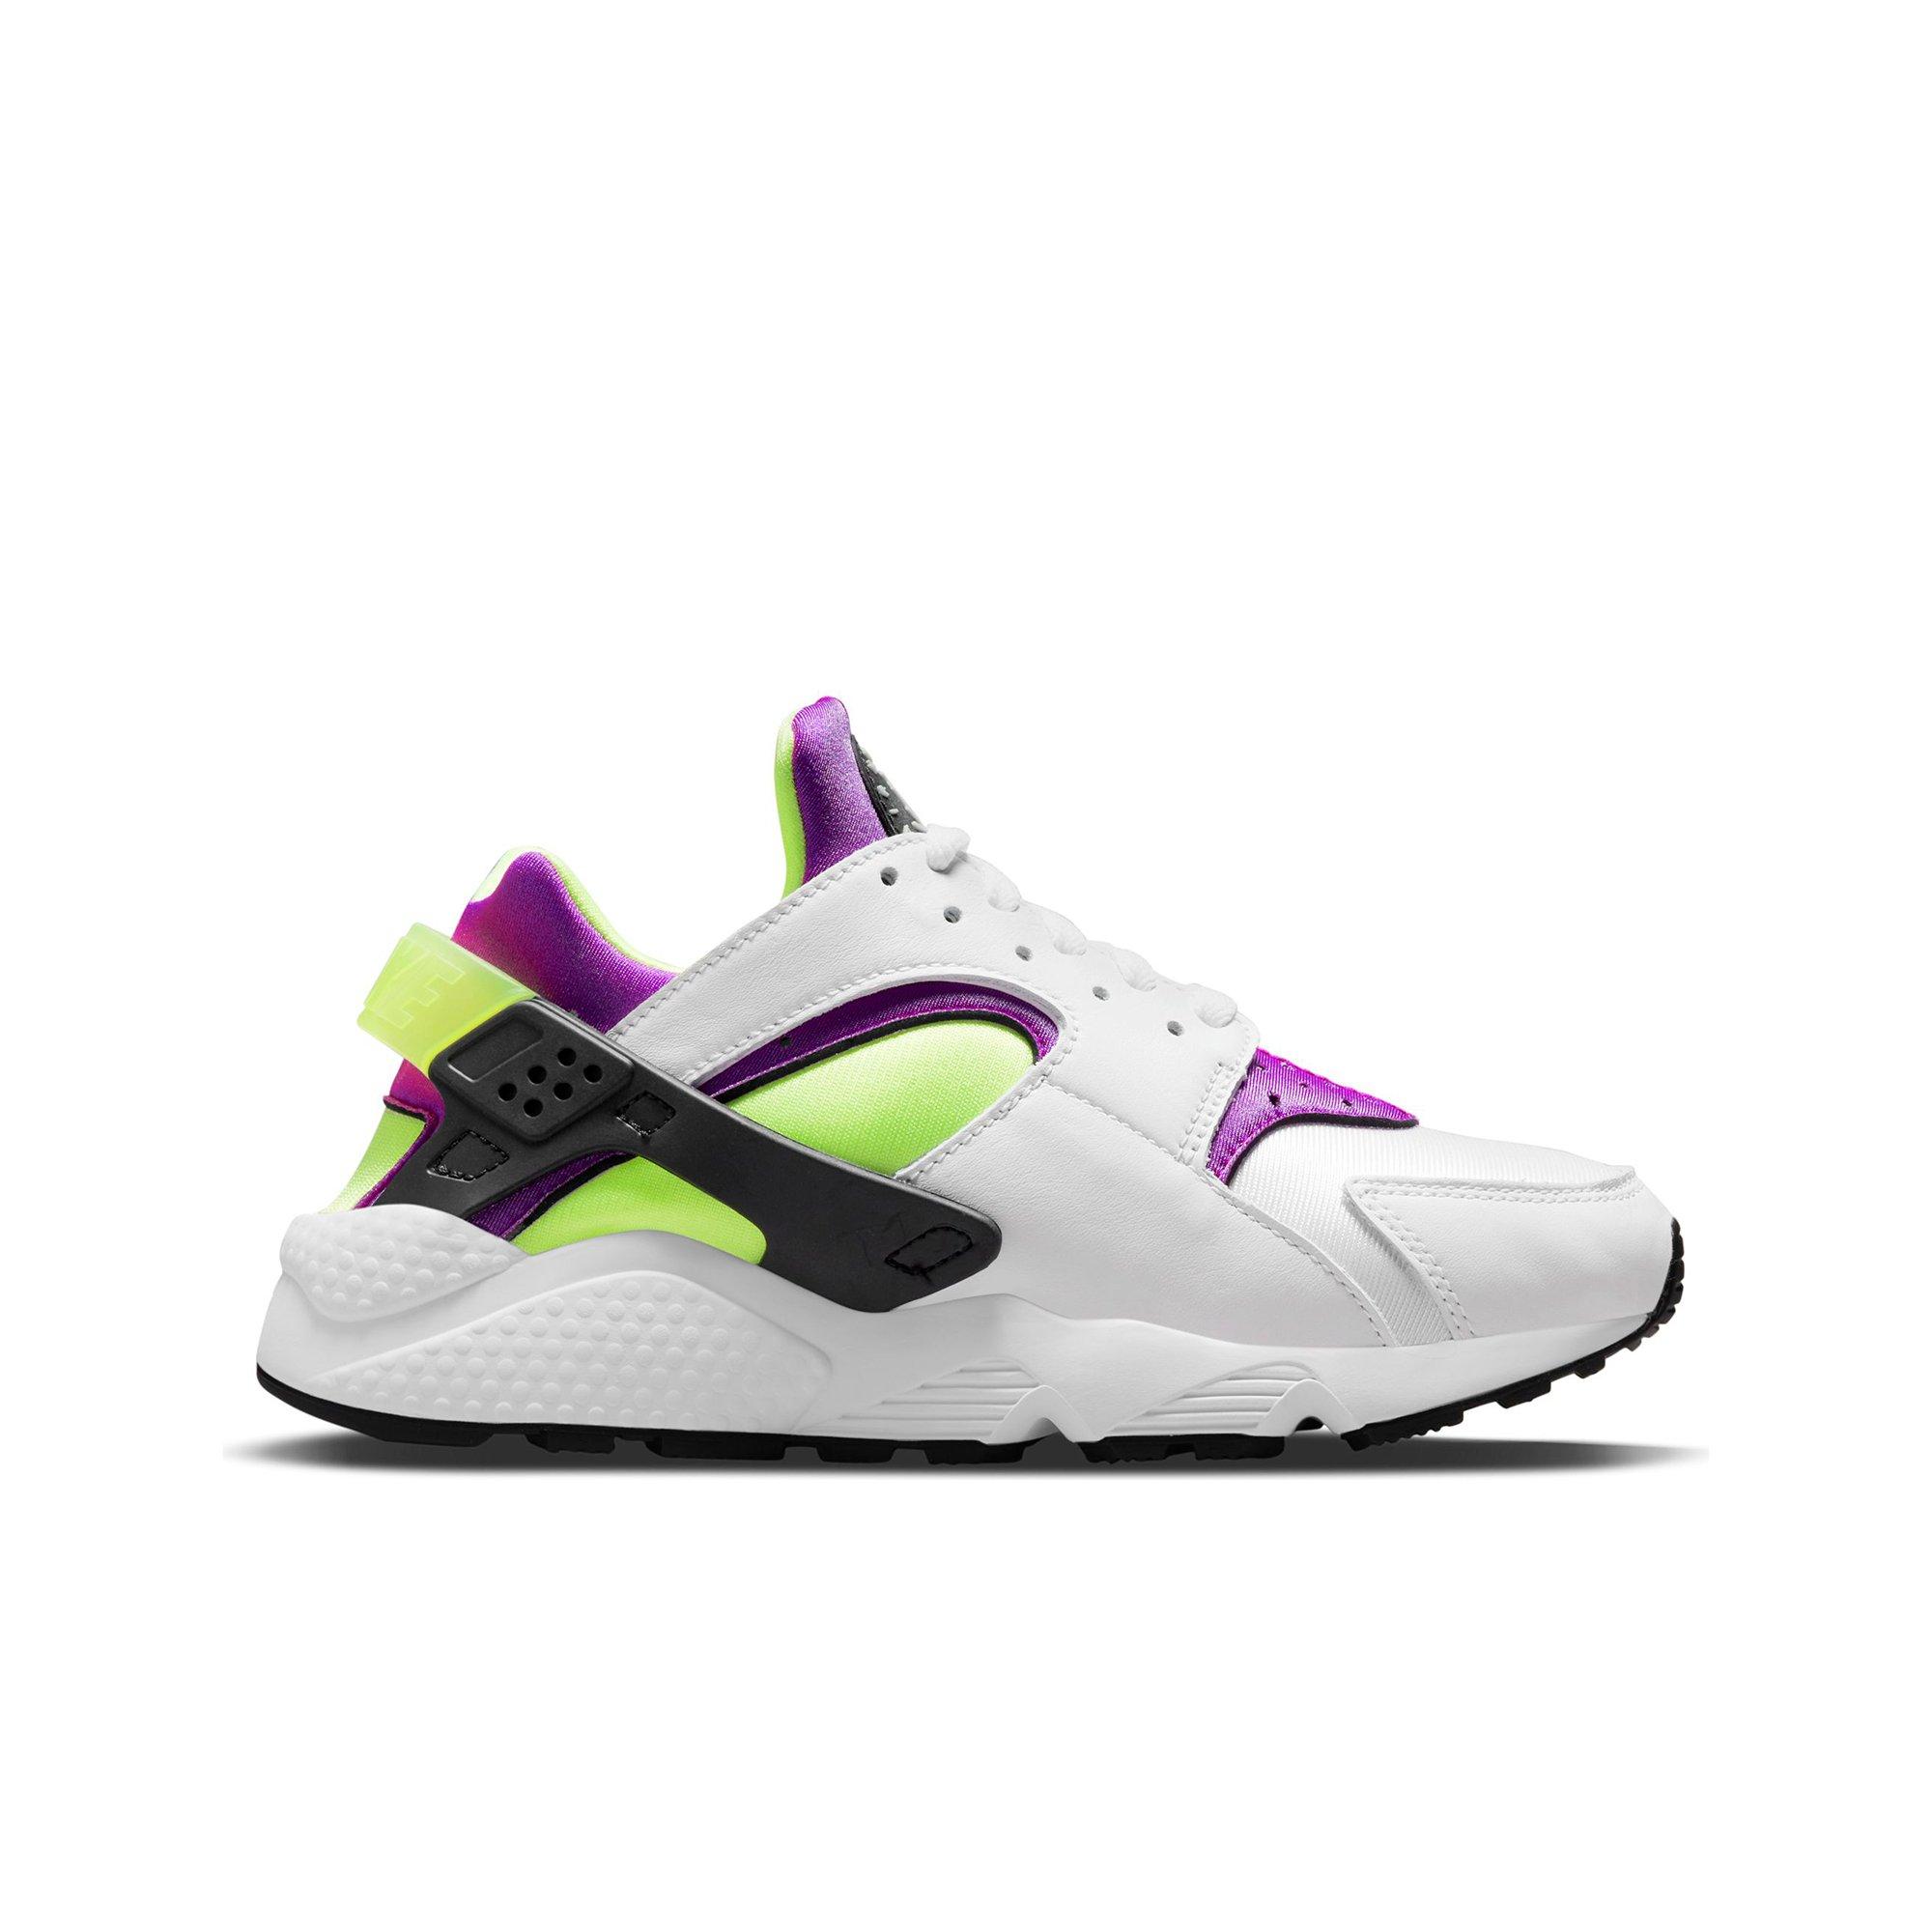 Nike Air Huarache "White/Neon Women's Shoe